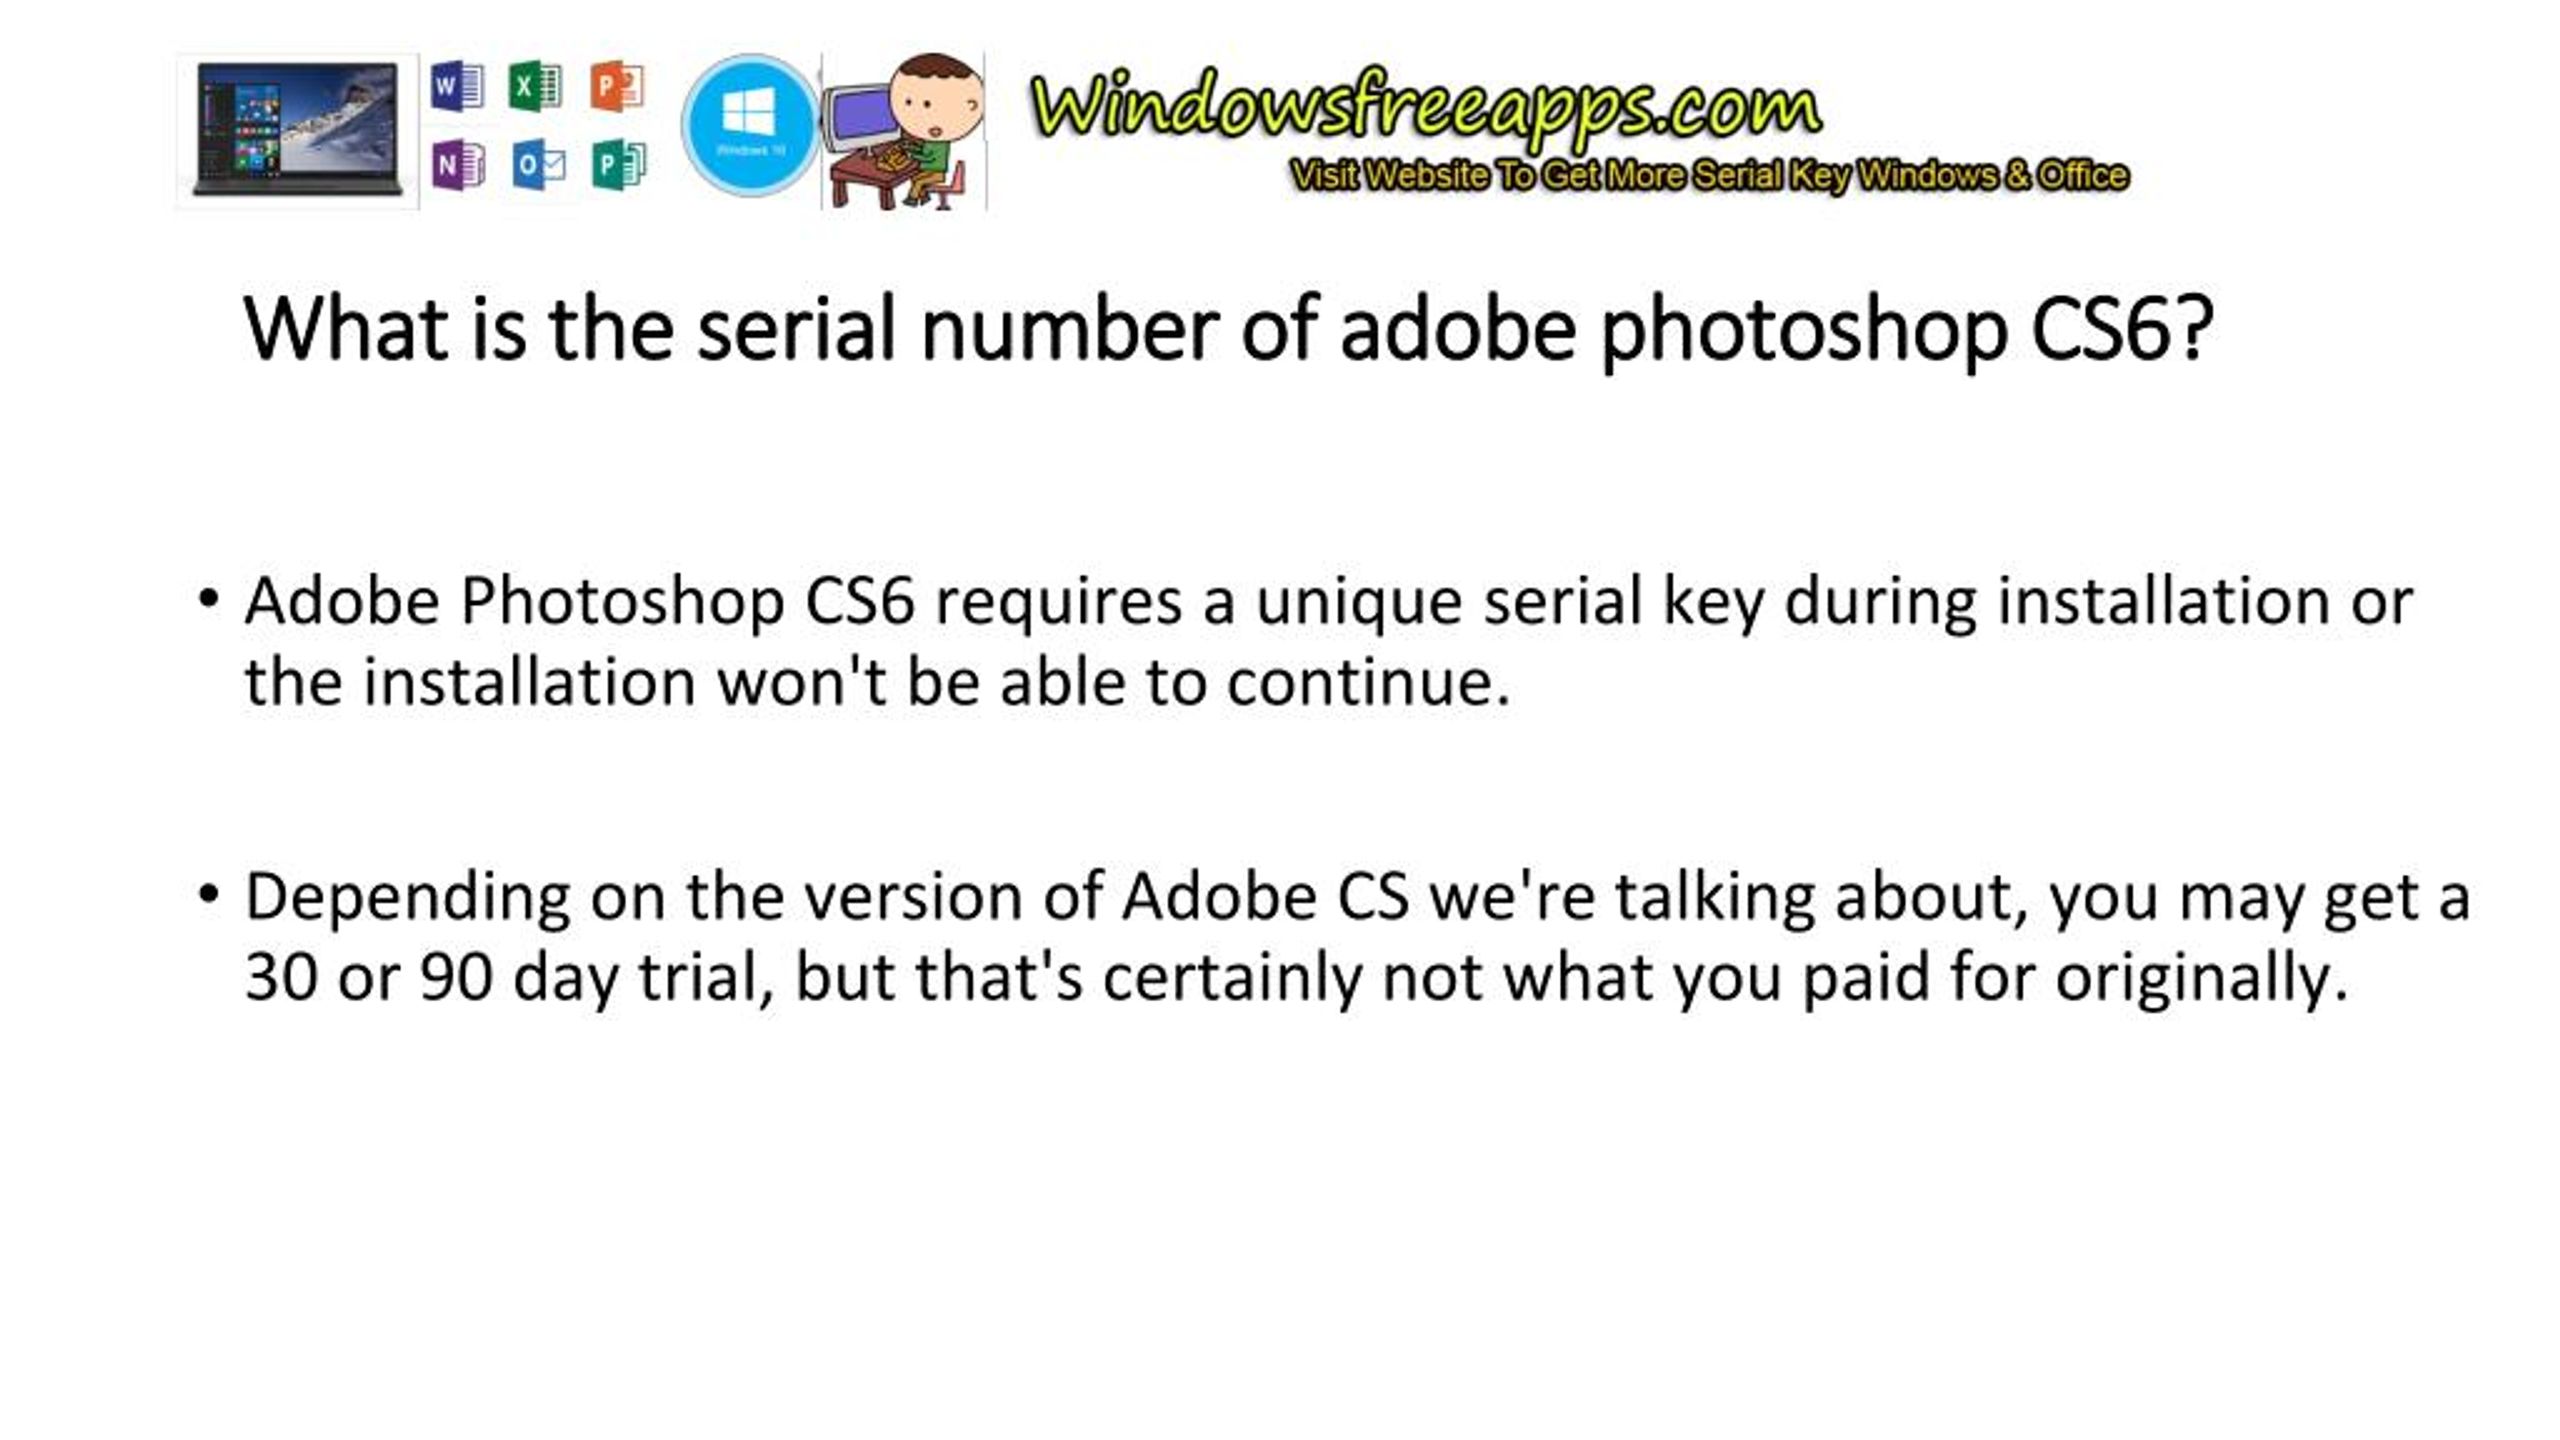 adobe photoshop serial number cs6 mac free